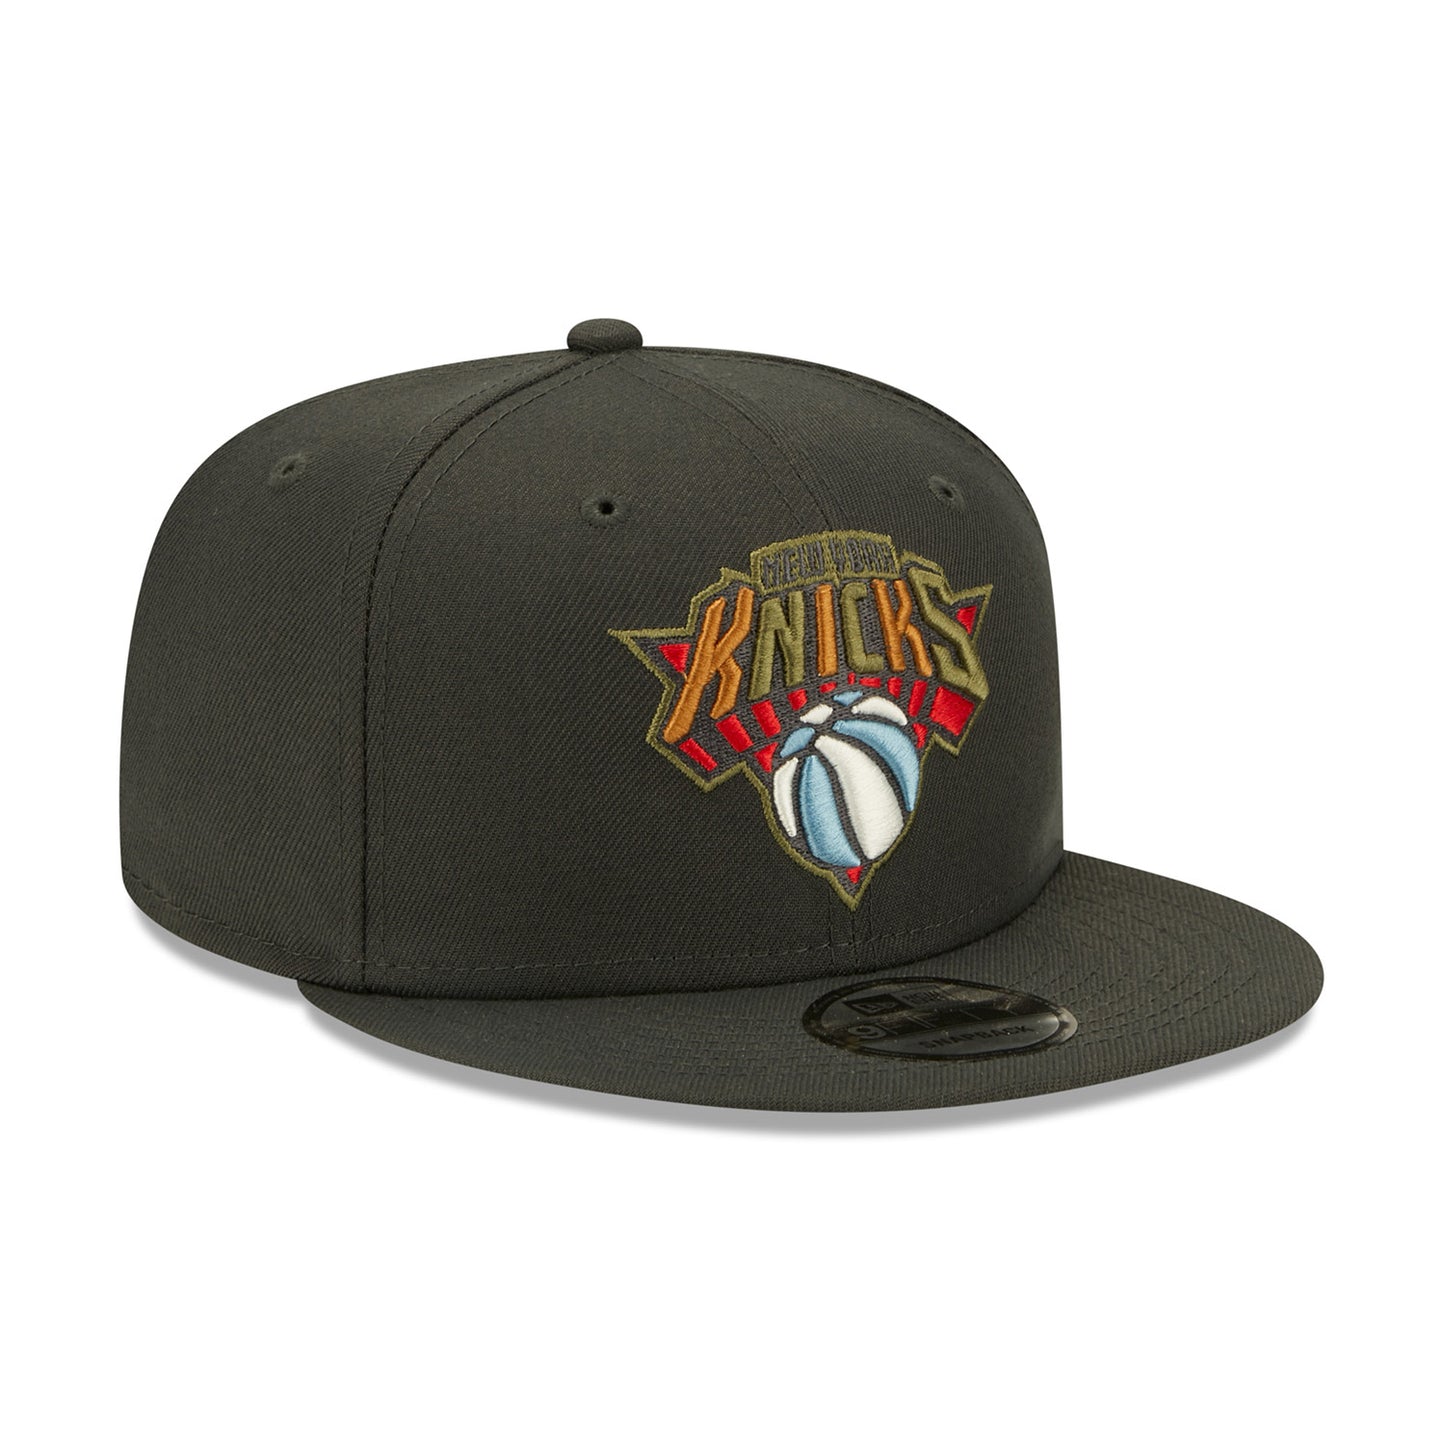 New Era Knicks Multi Color Logo Snapback - Angled Right Side View